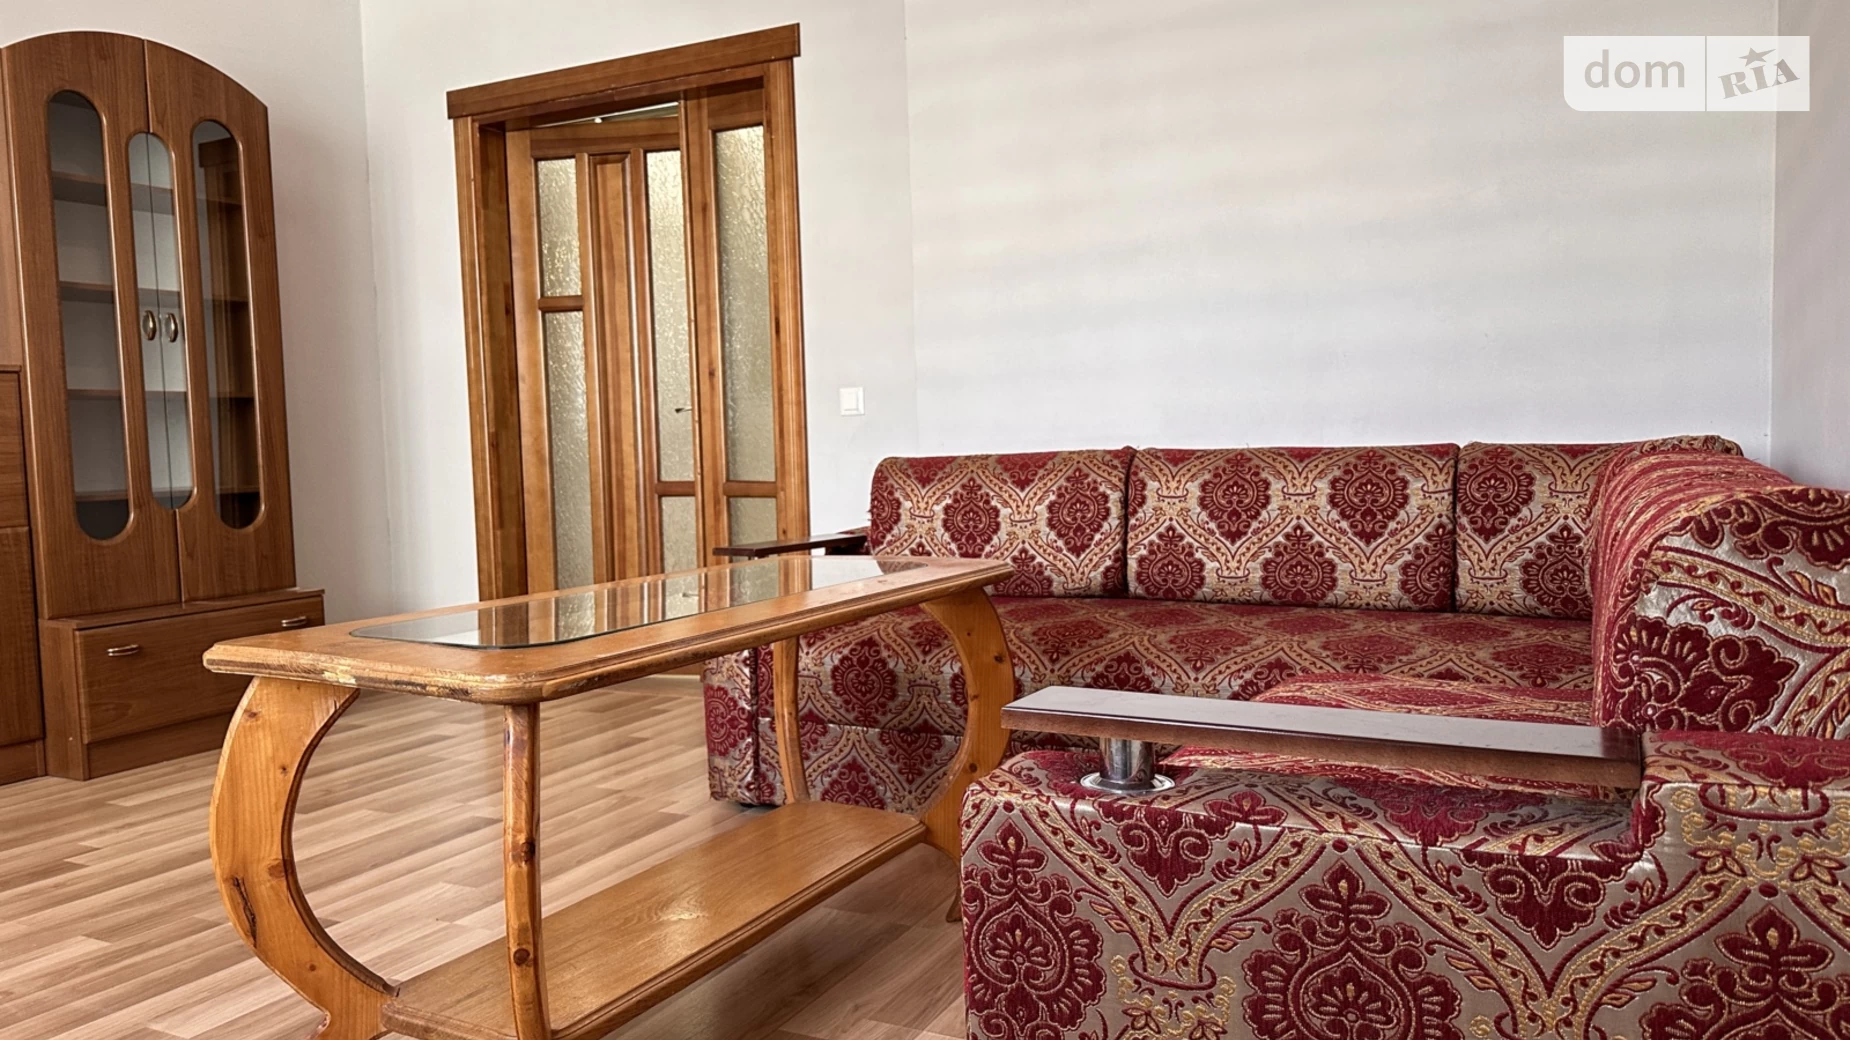 Продается 2-комнатная квартира 61.4 кв. м в Ивано-Франковске - фото 3